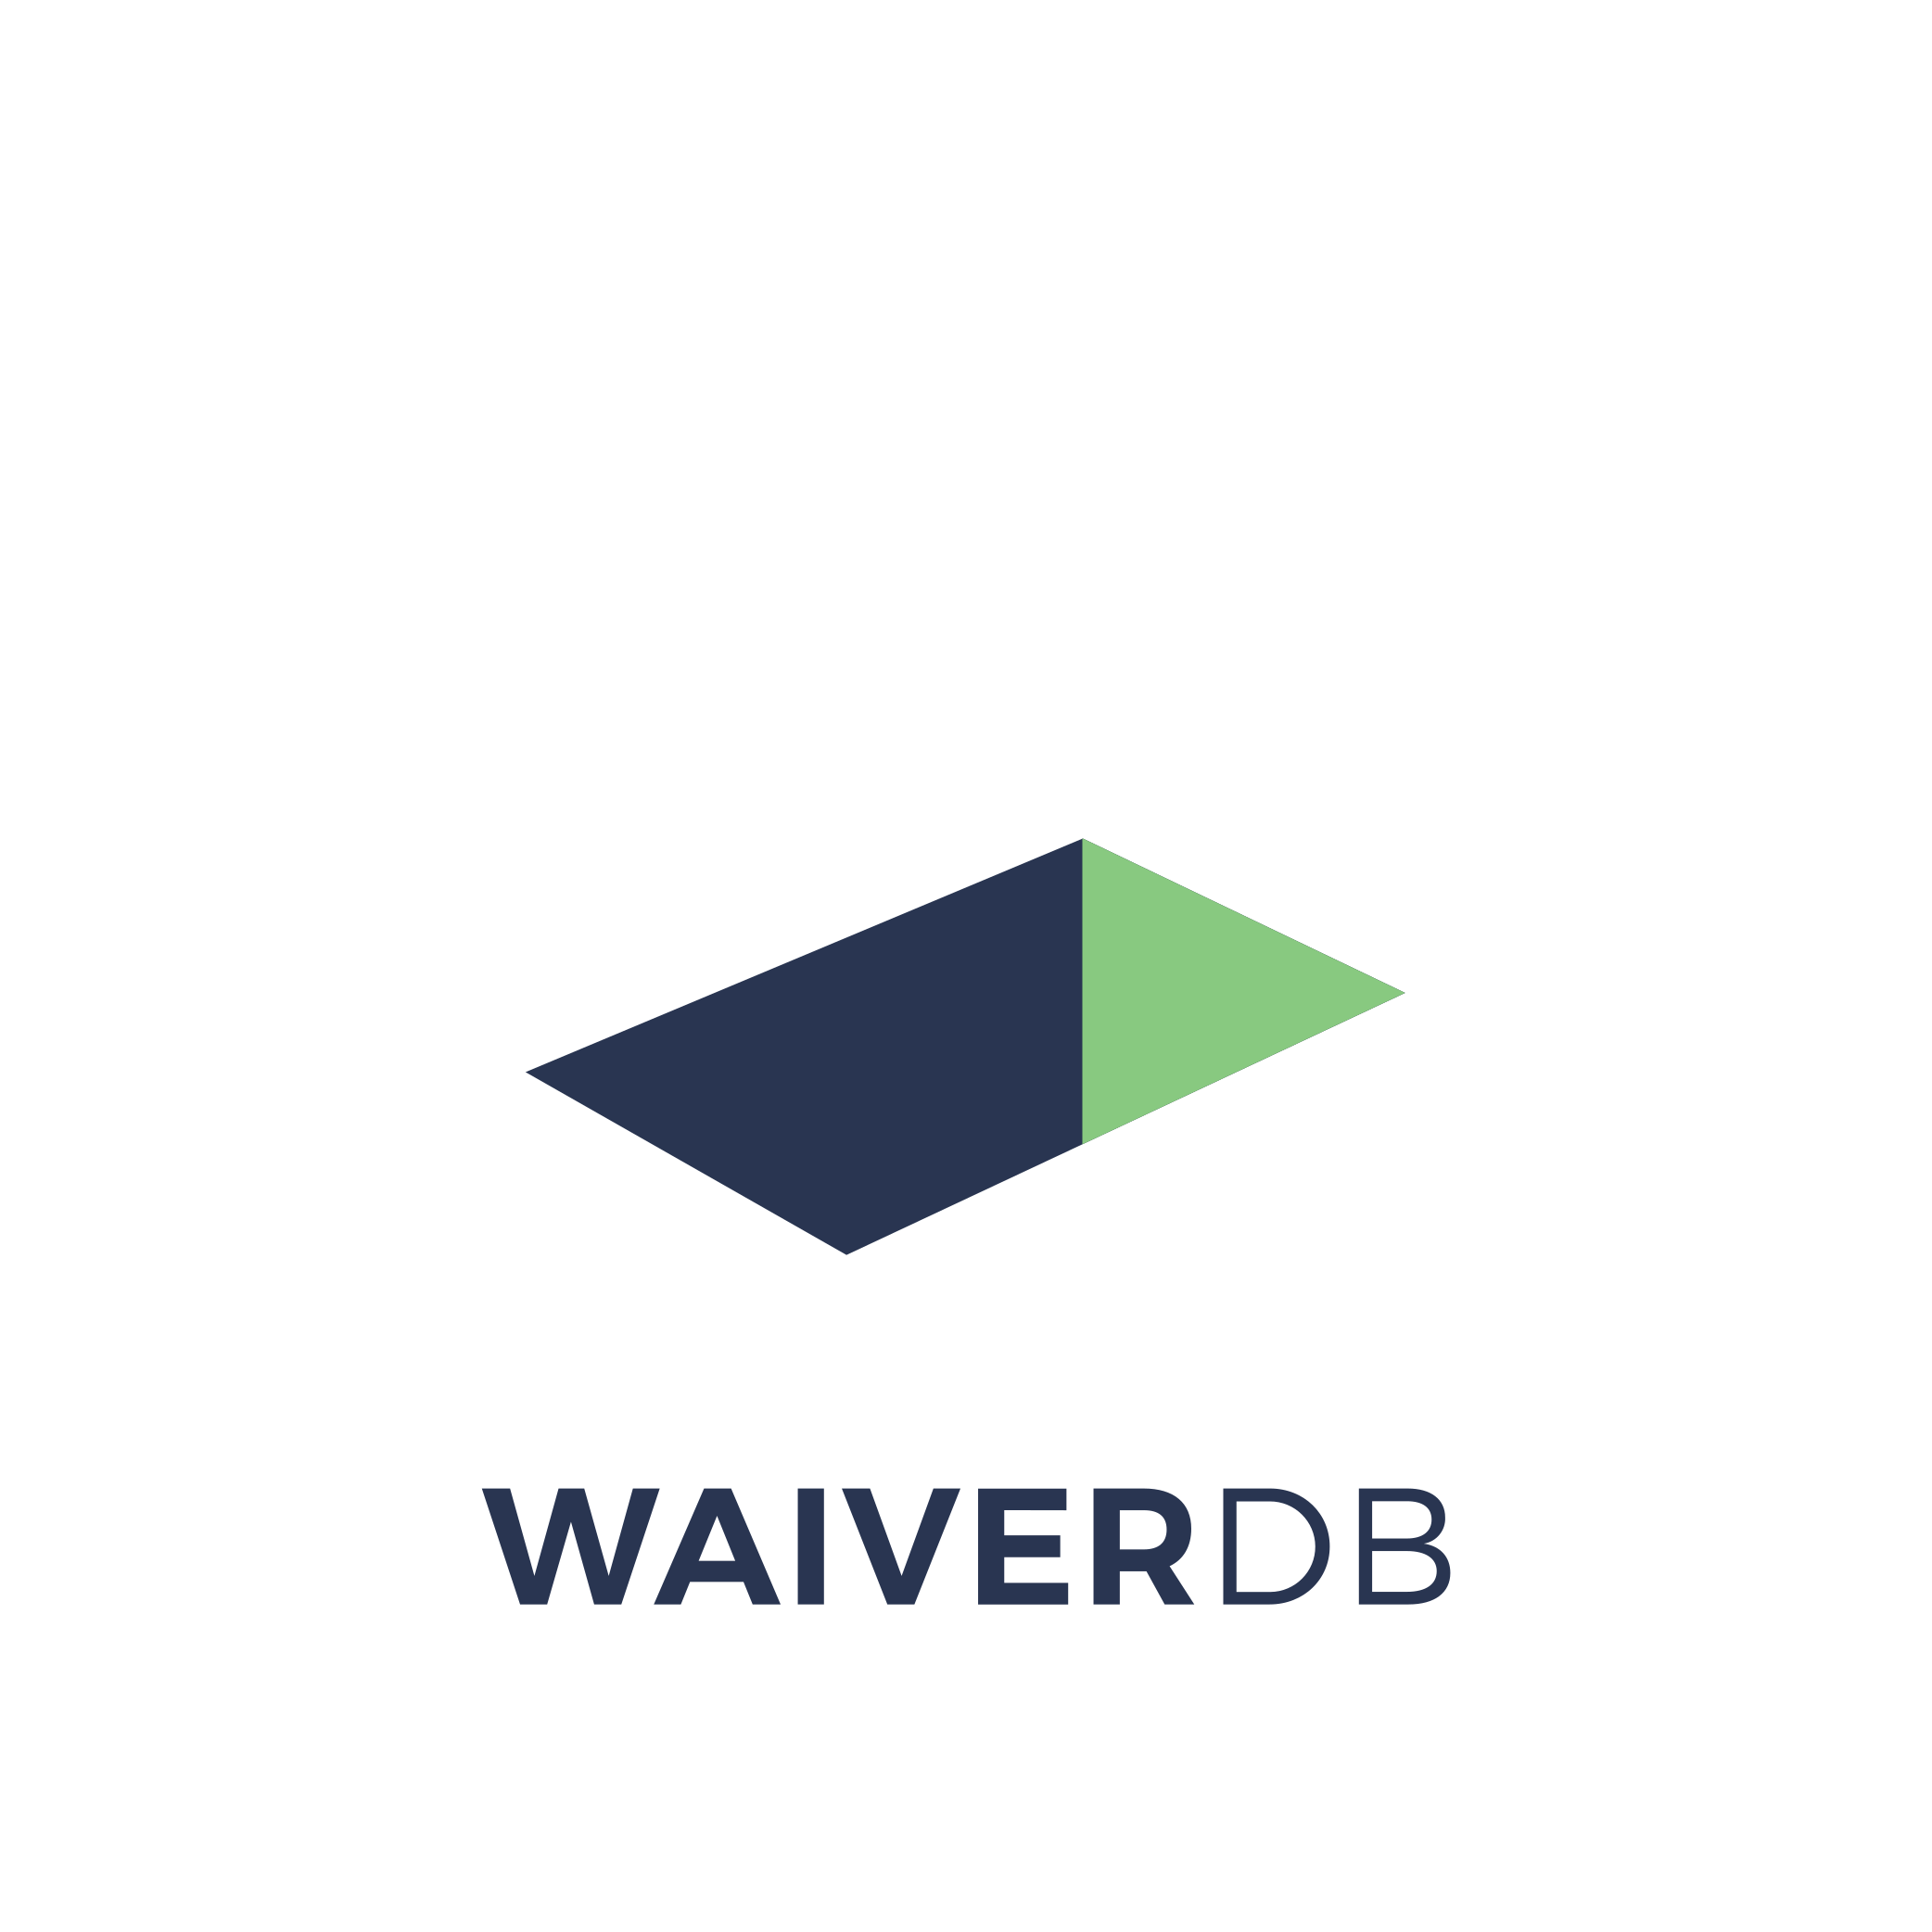 WaiverDB logo - color